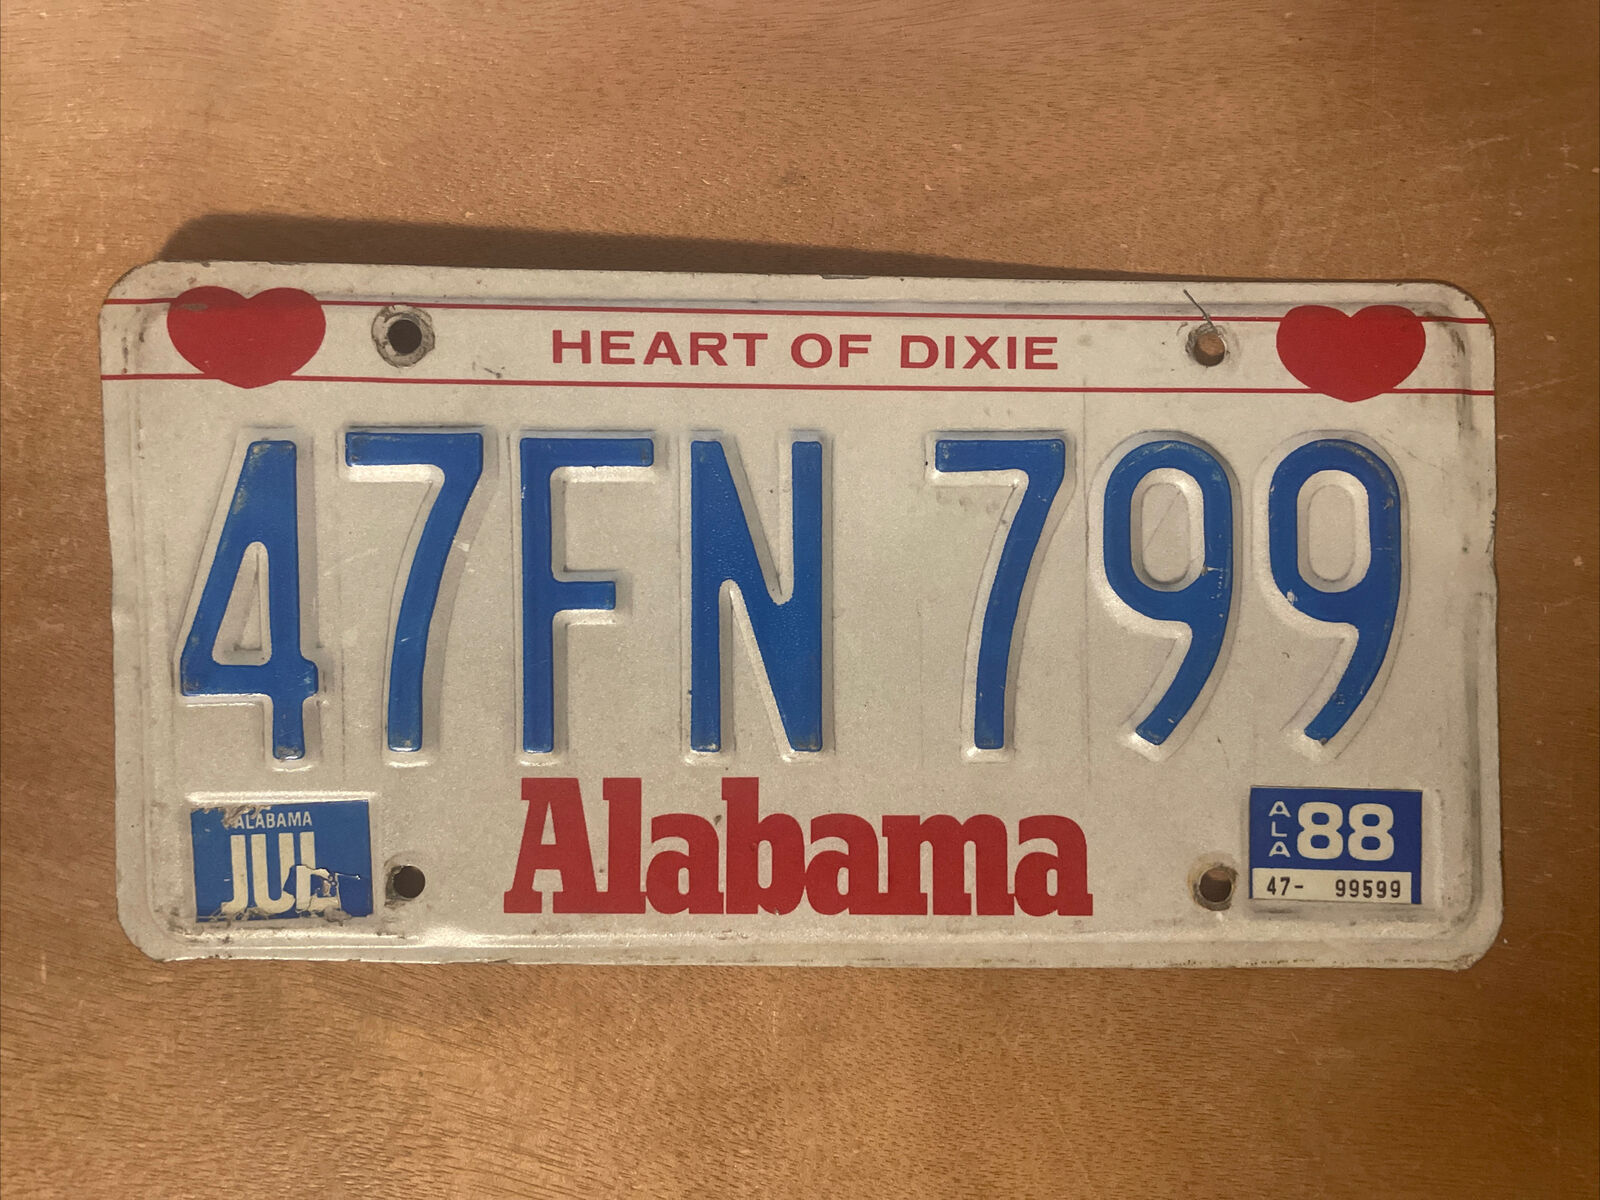 1988 Alabama License Plate # 47FN 799